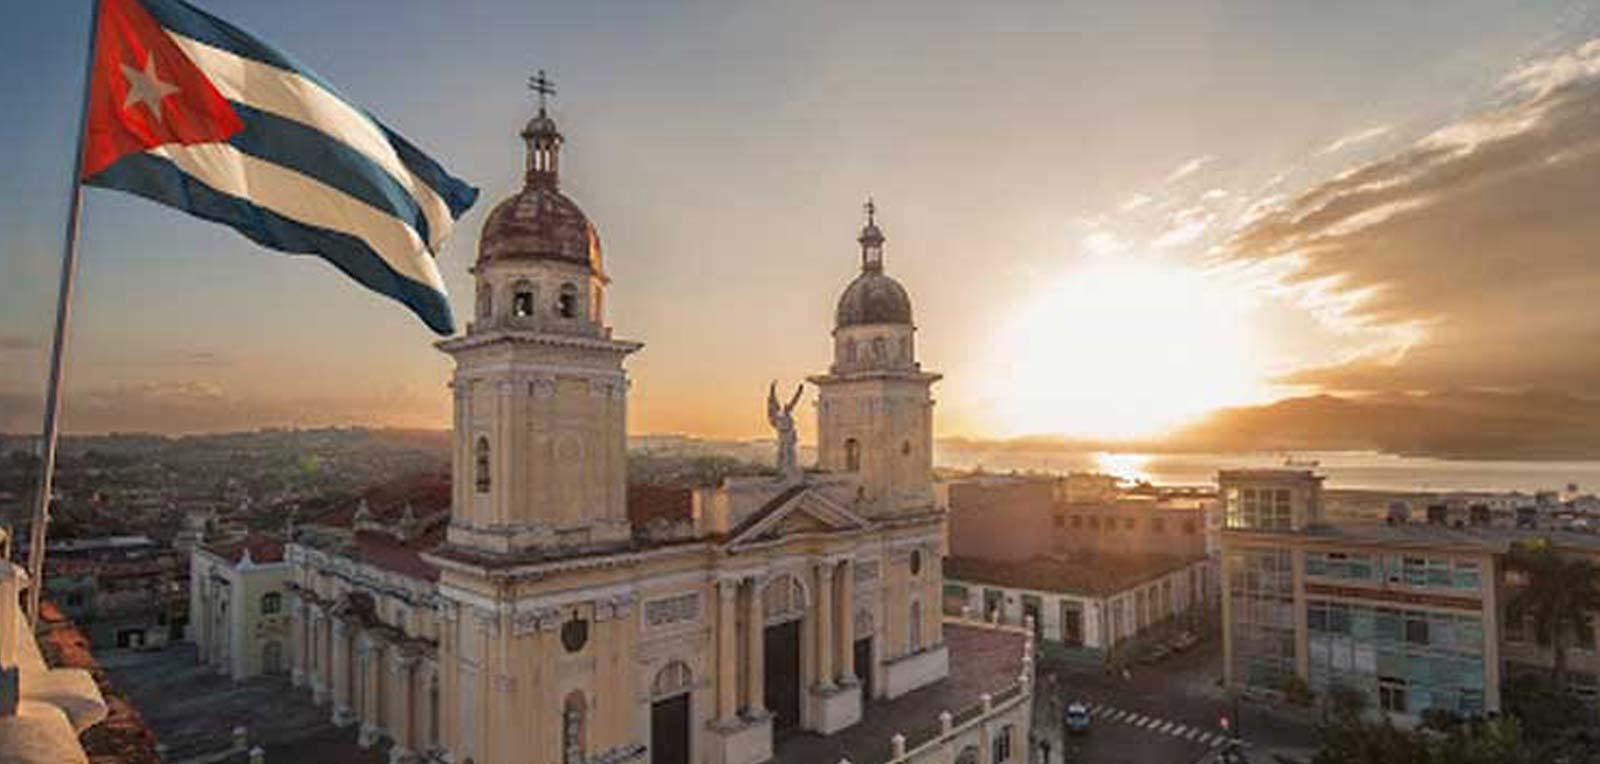 Santiago de Cuba declared a Creative City by Unesco